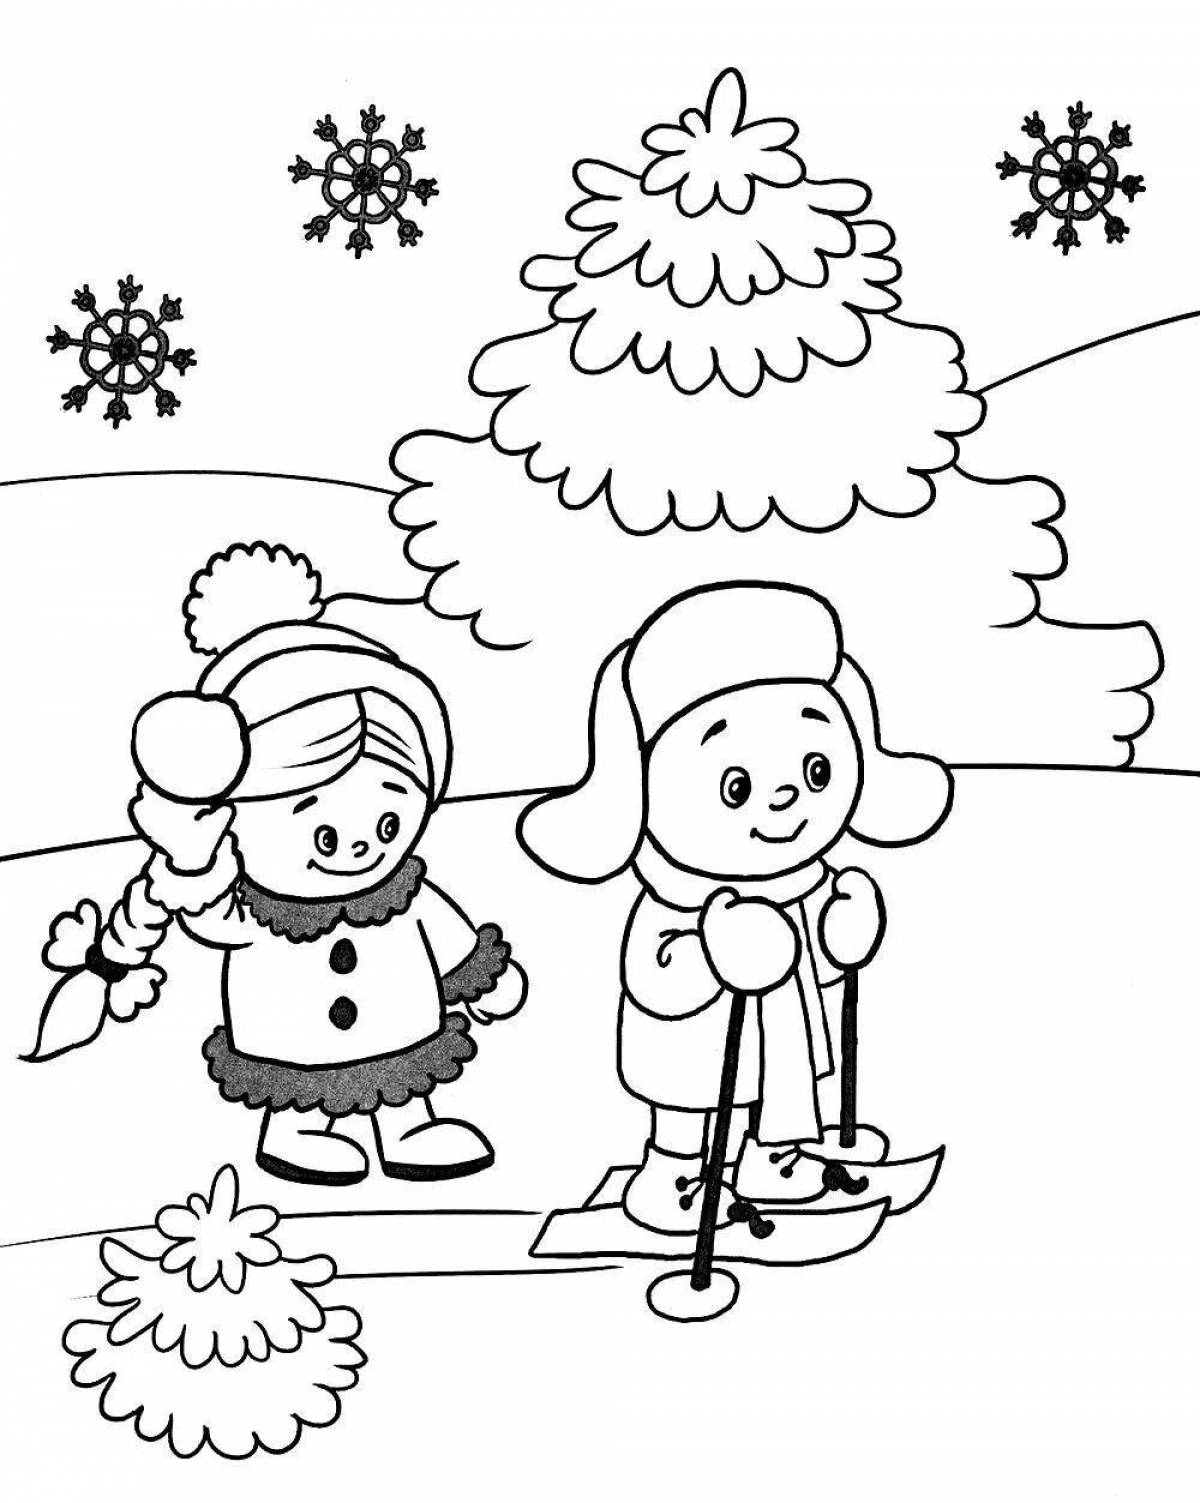 Playful coloring drawing of winter fun